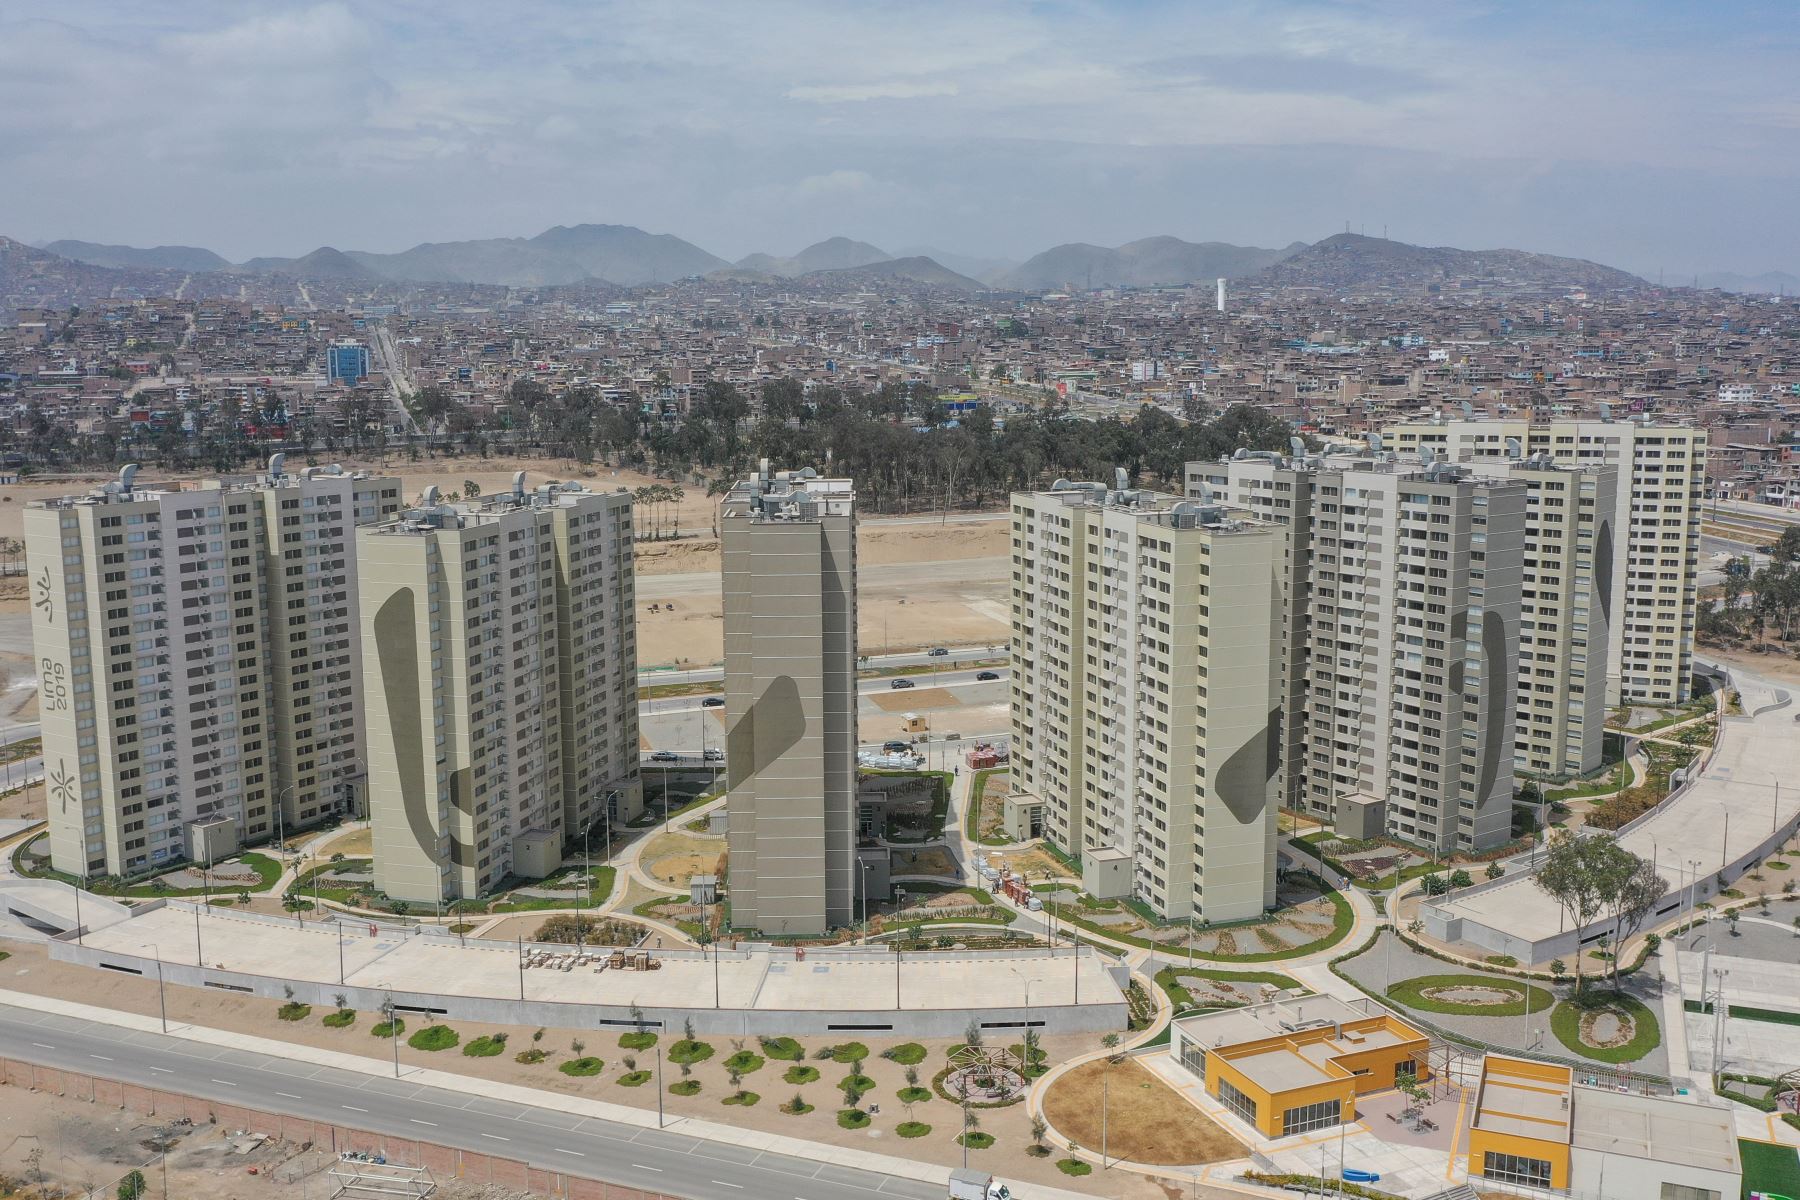 Villa Panamericana de Lima 2019.